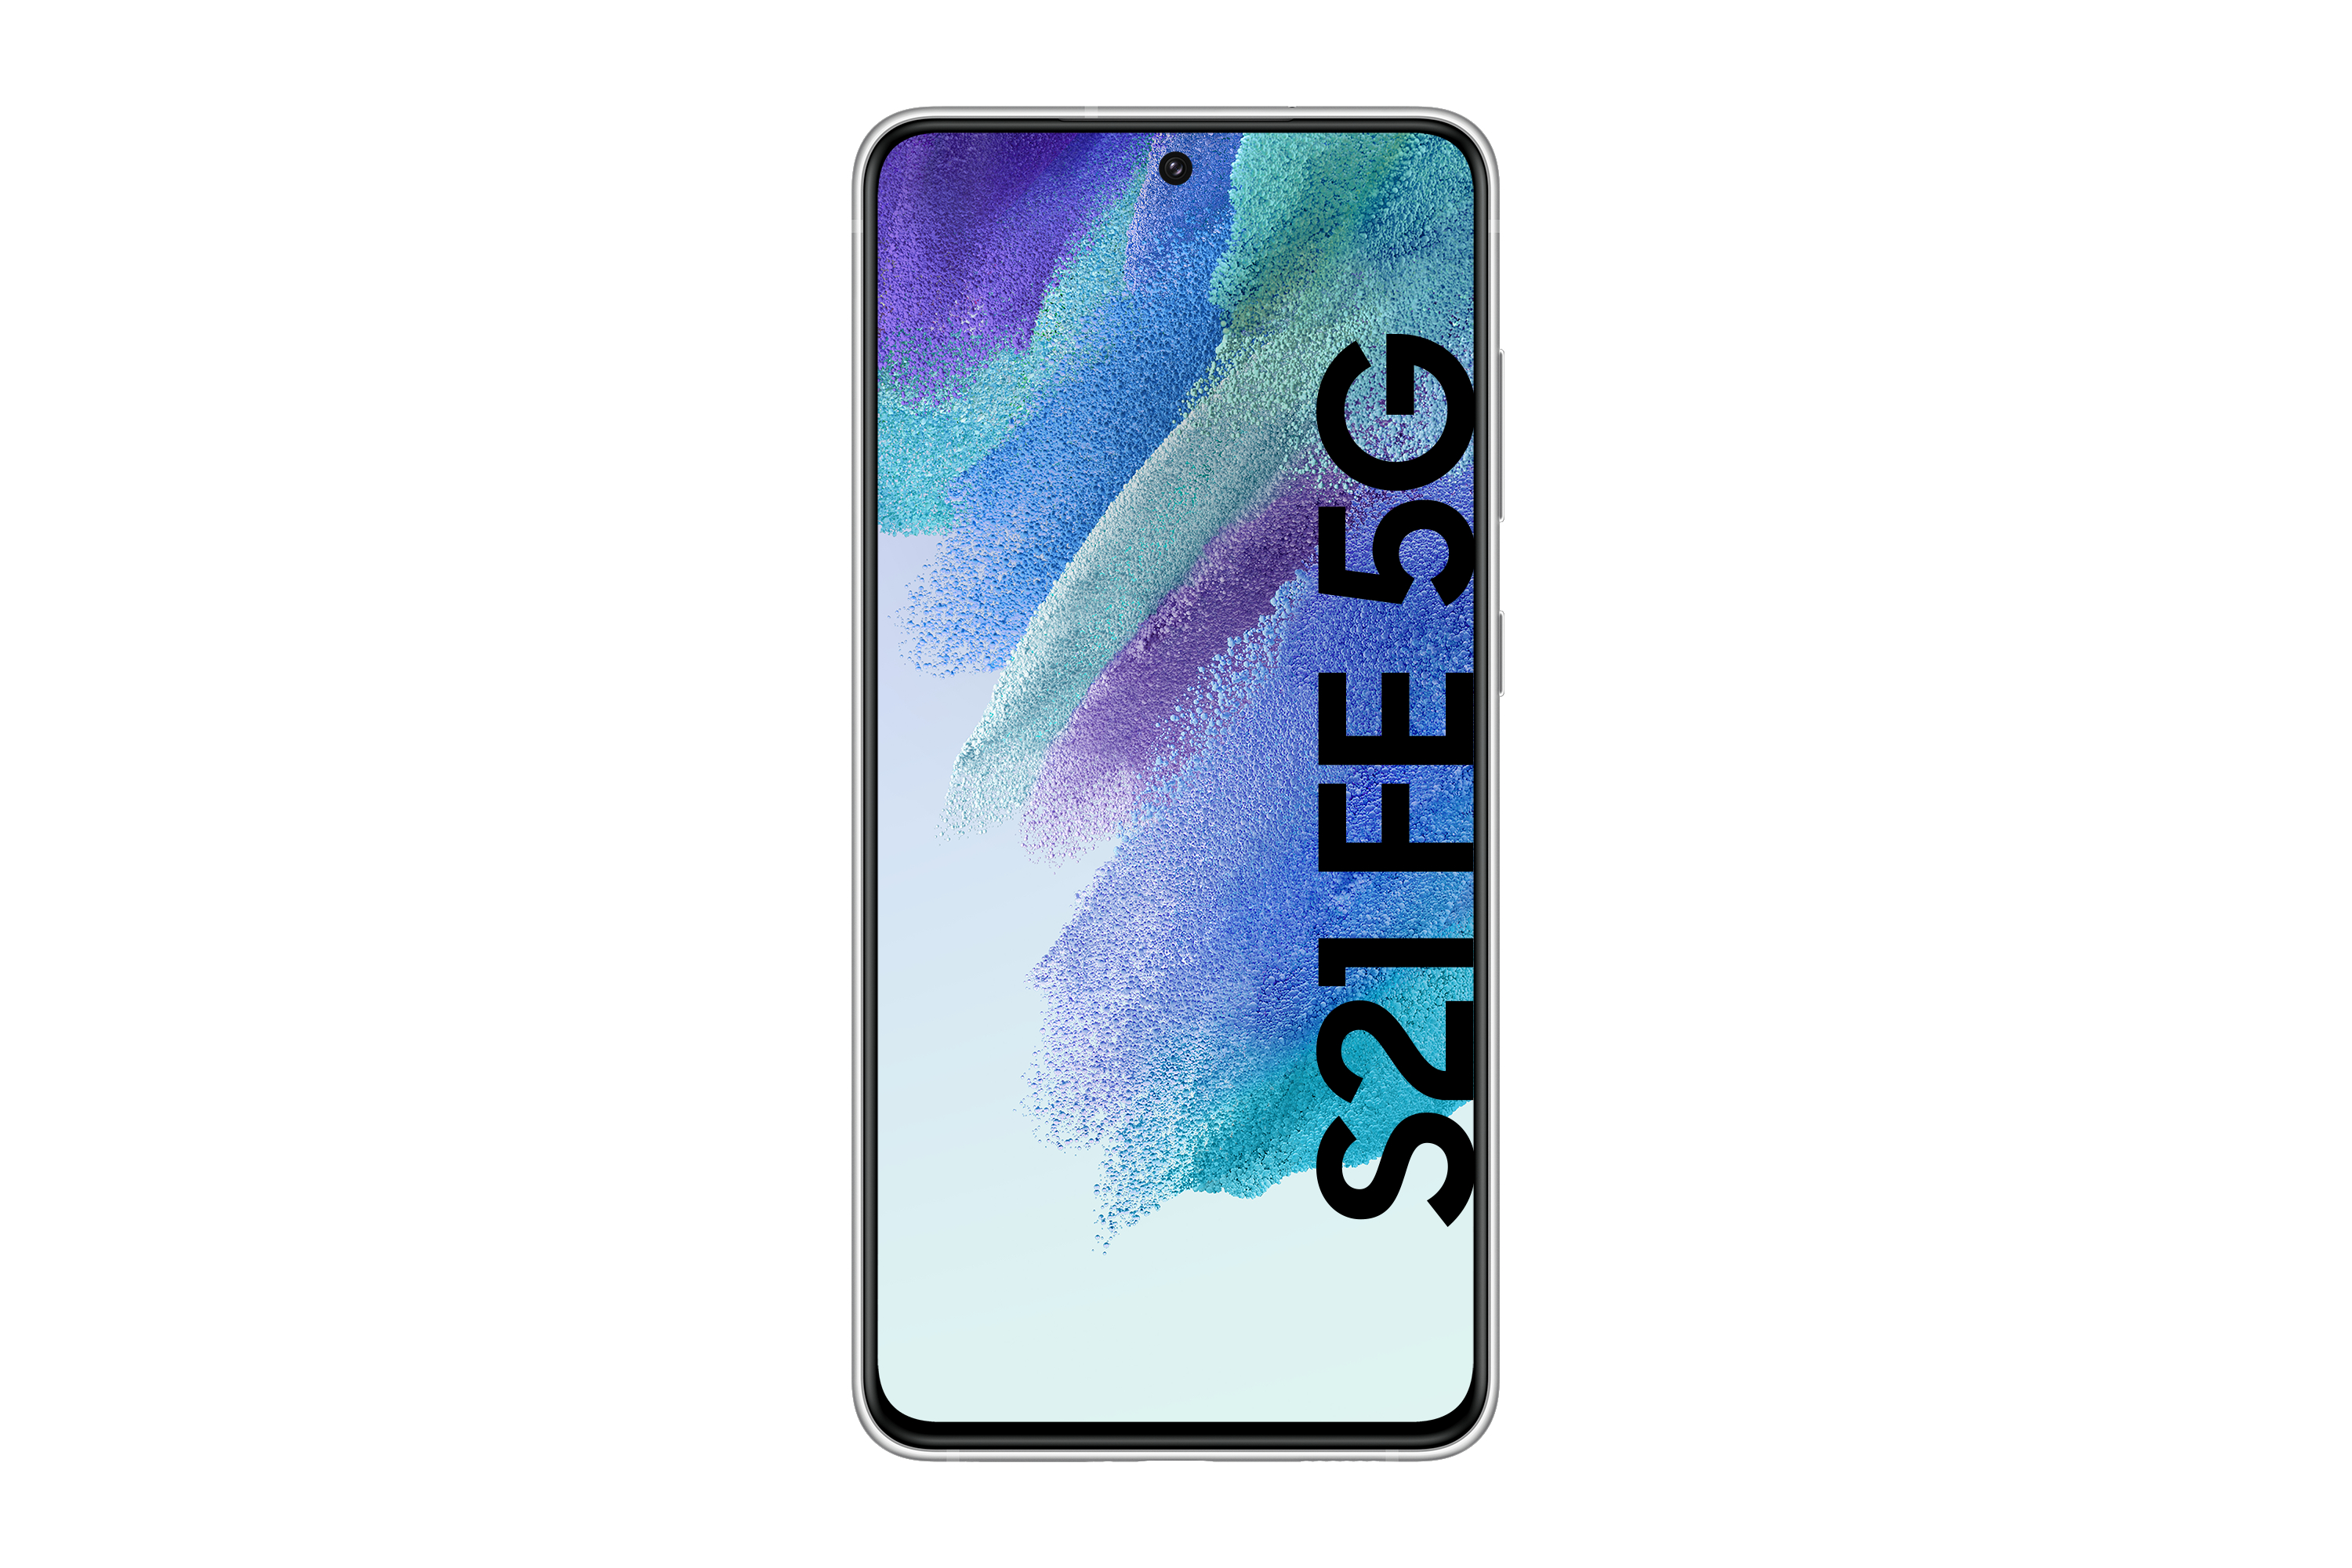 S21 FE SAMSUNG Dual GB 5G White Galaxy SIM 256